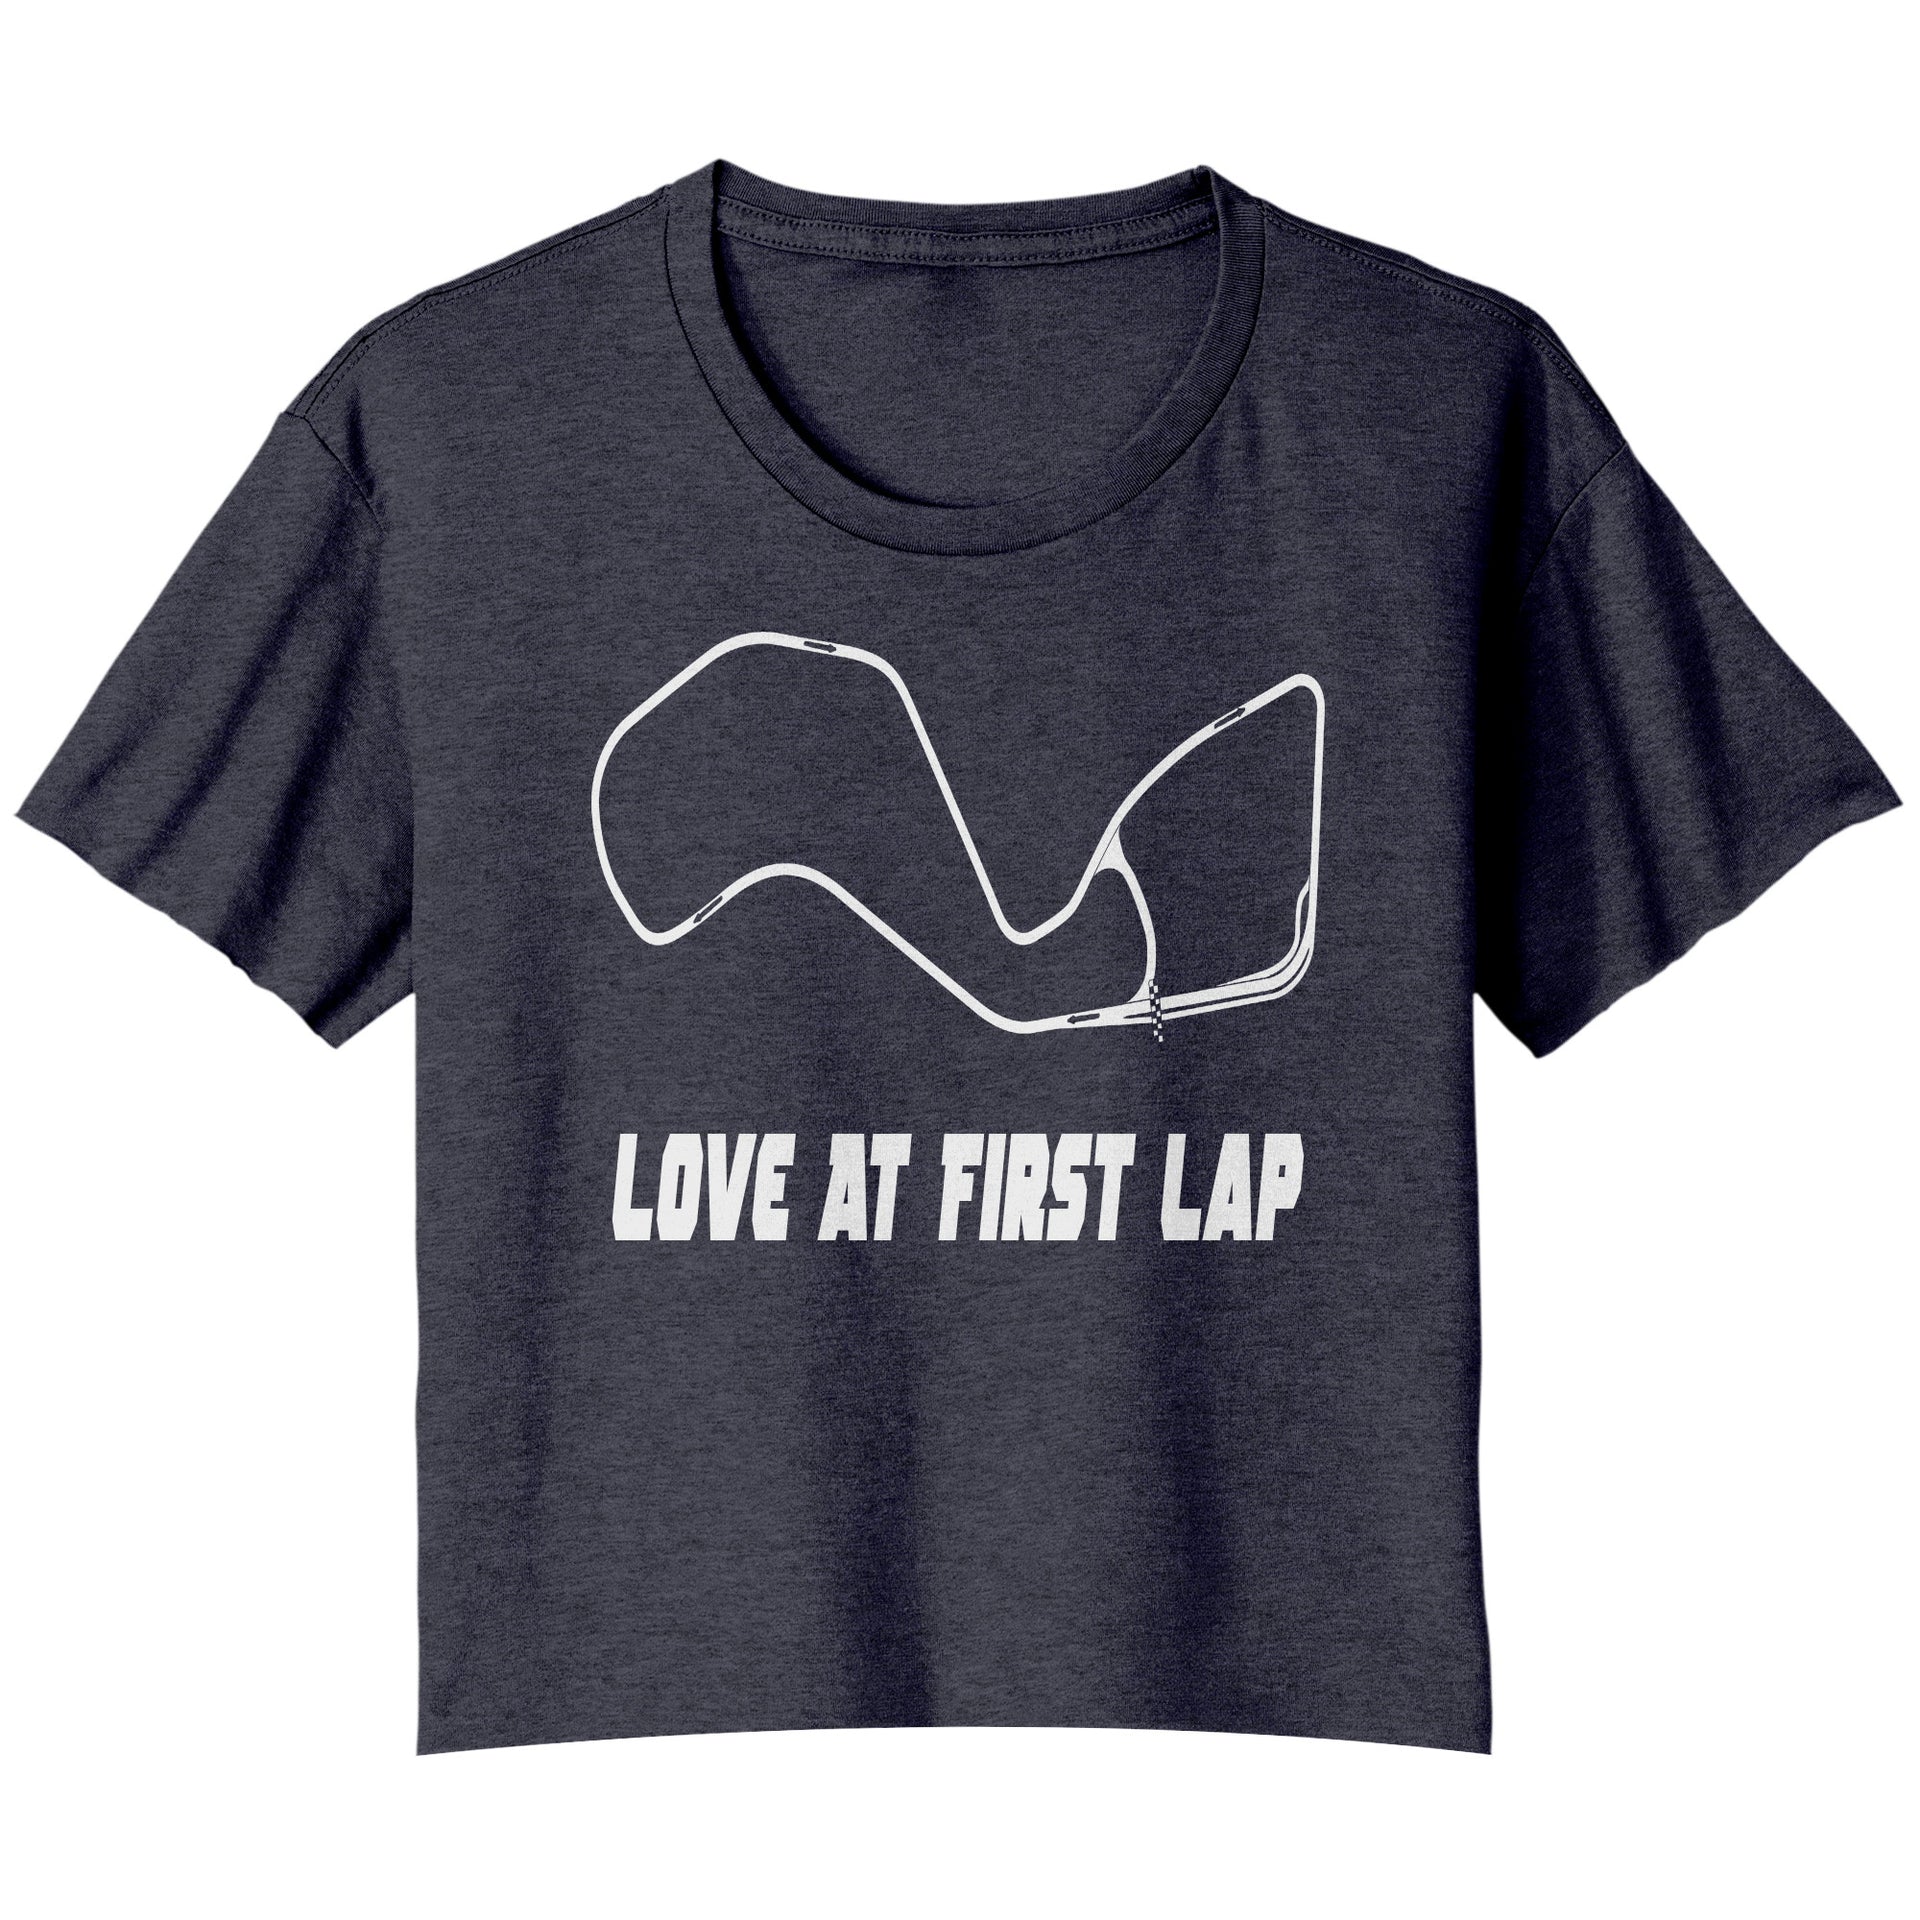 race track t-shirts